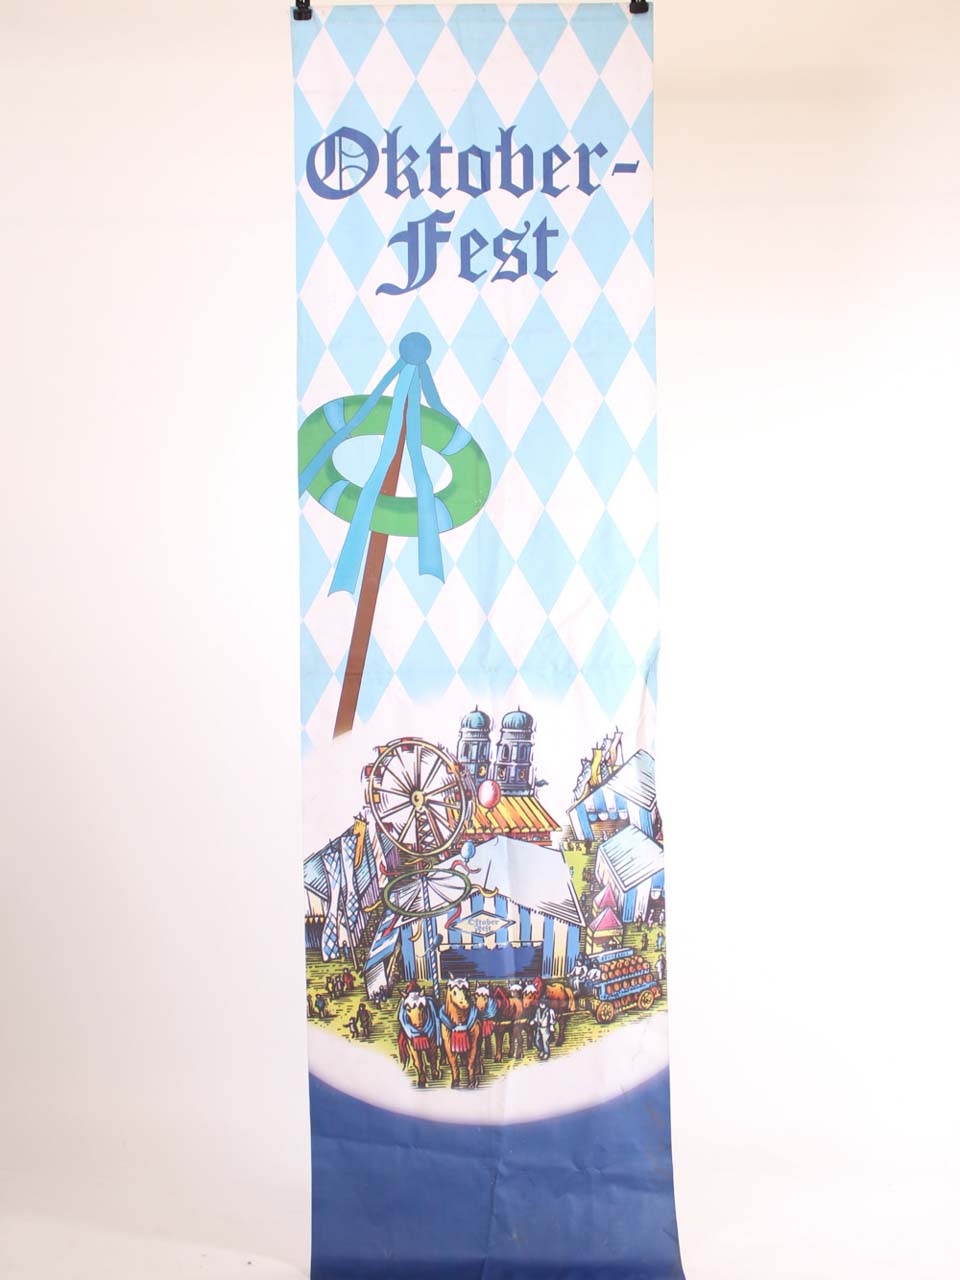 Oktoberfest banner